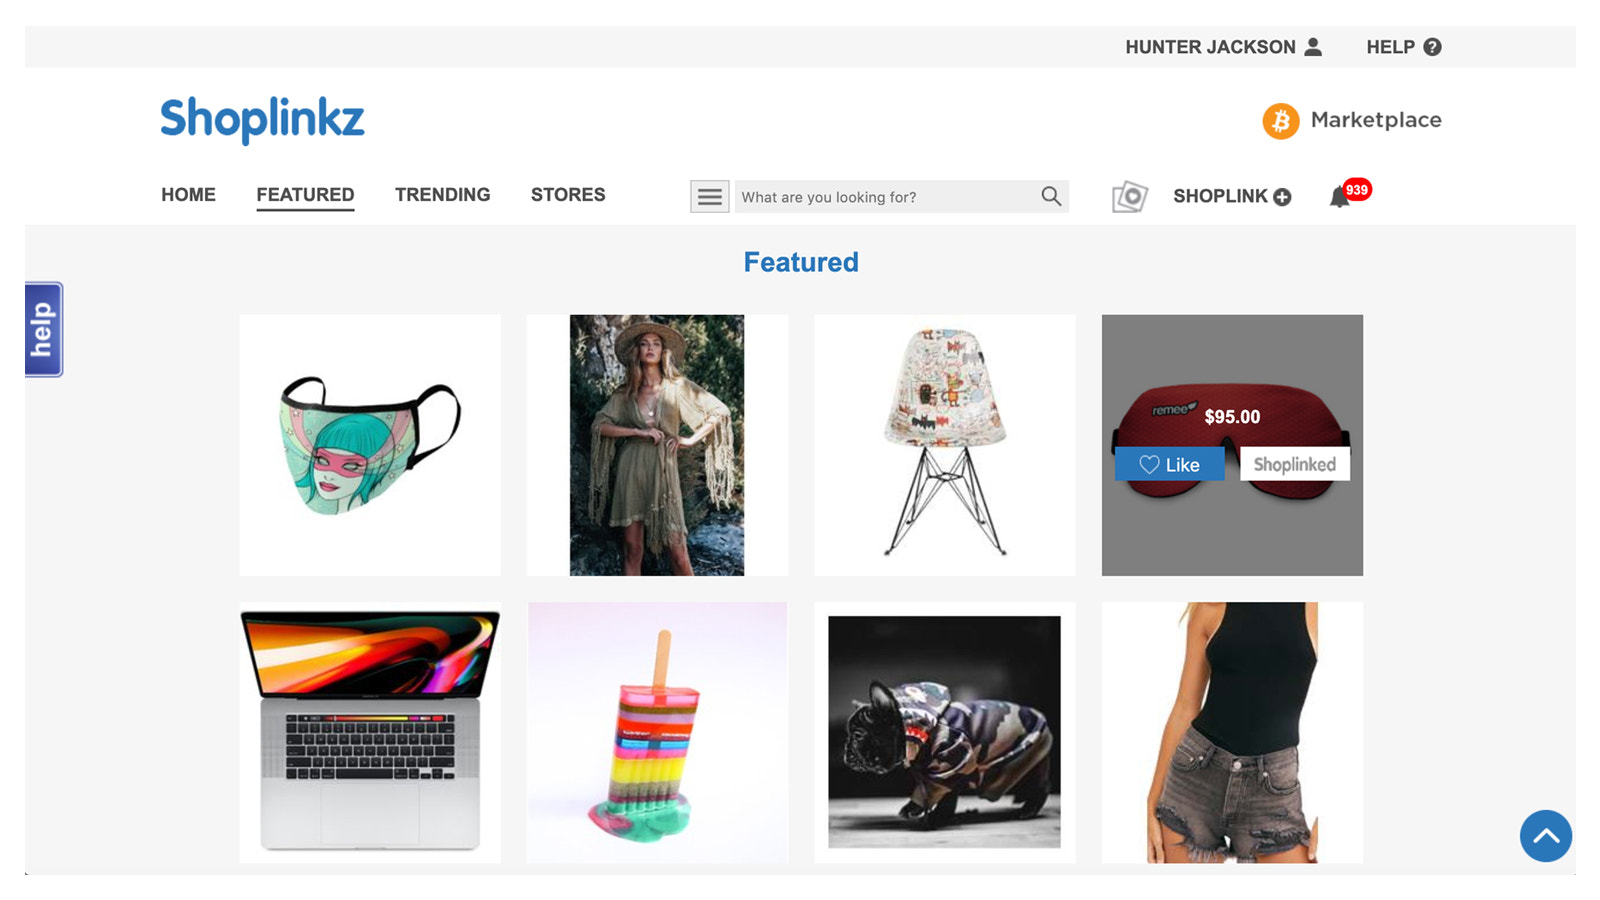 Shoplinkz - Social Commerce Platform - Featured Products